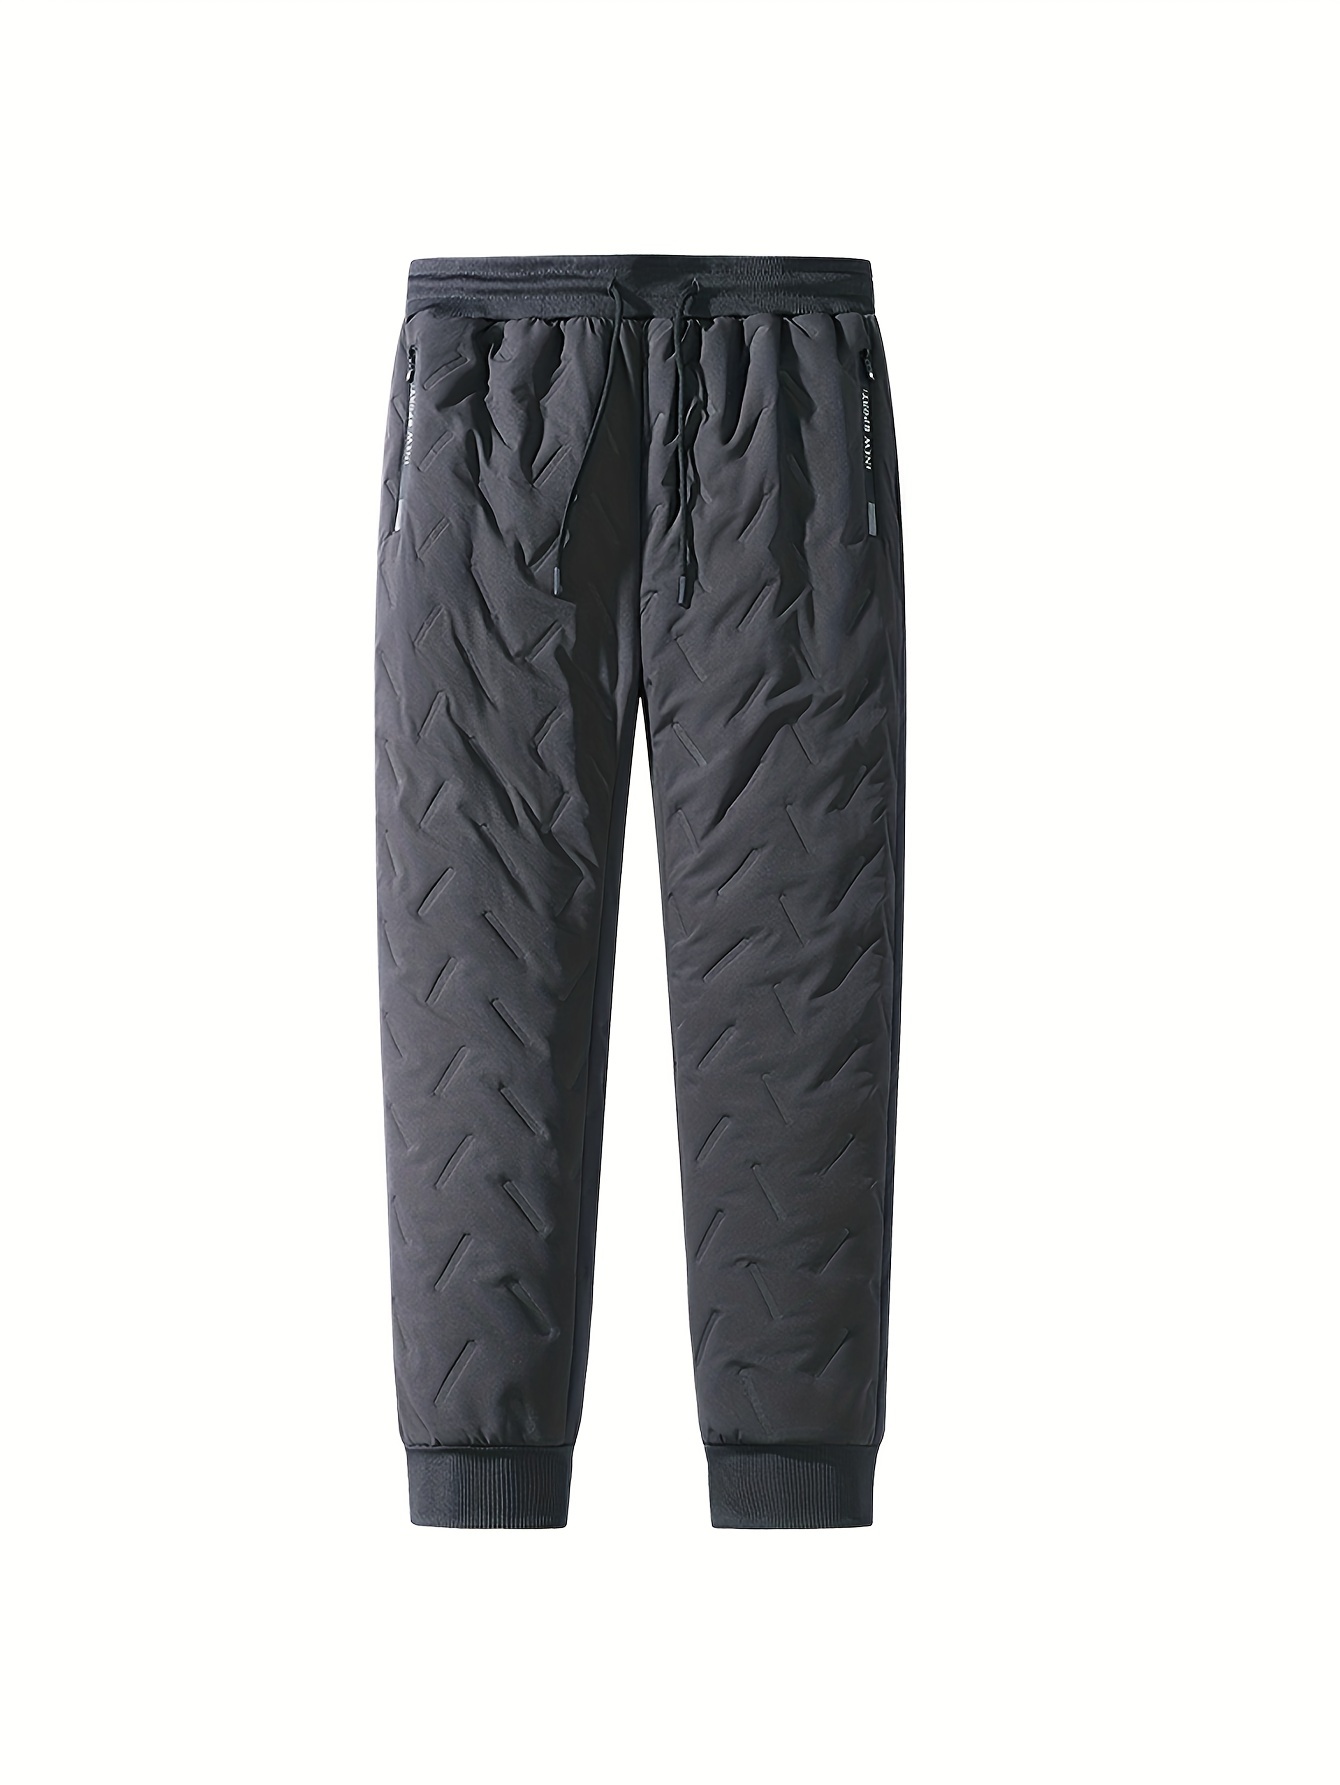 Men Winter Warm Fleece Lined Pants Hiking Camping Skiing Fishing Trouser  Outdoor